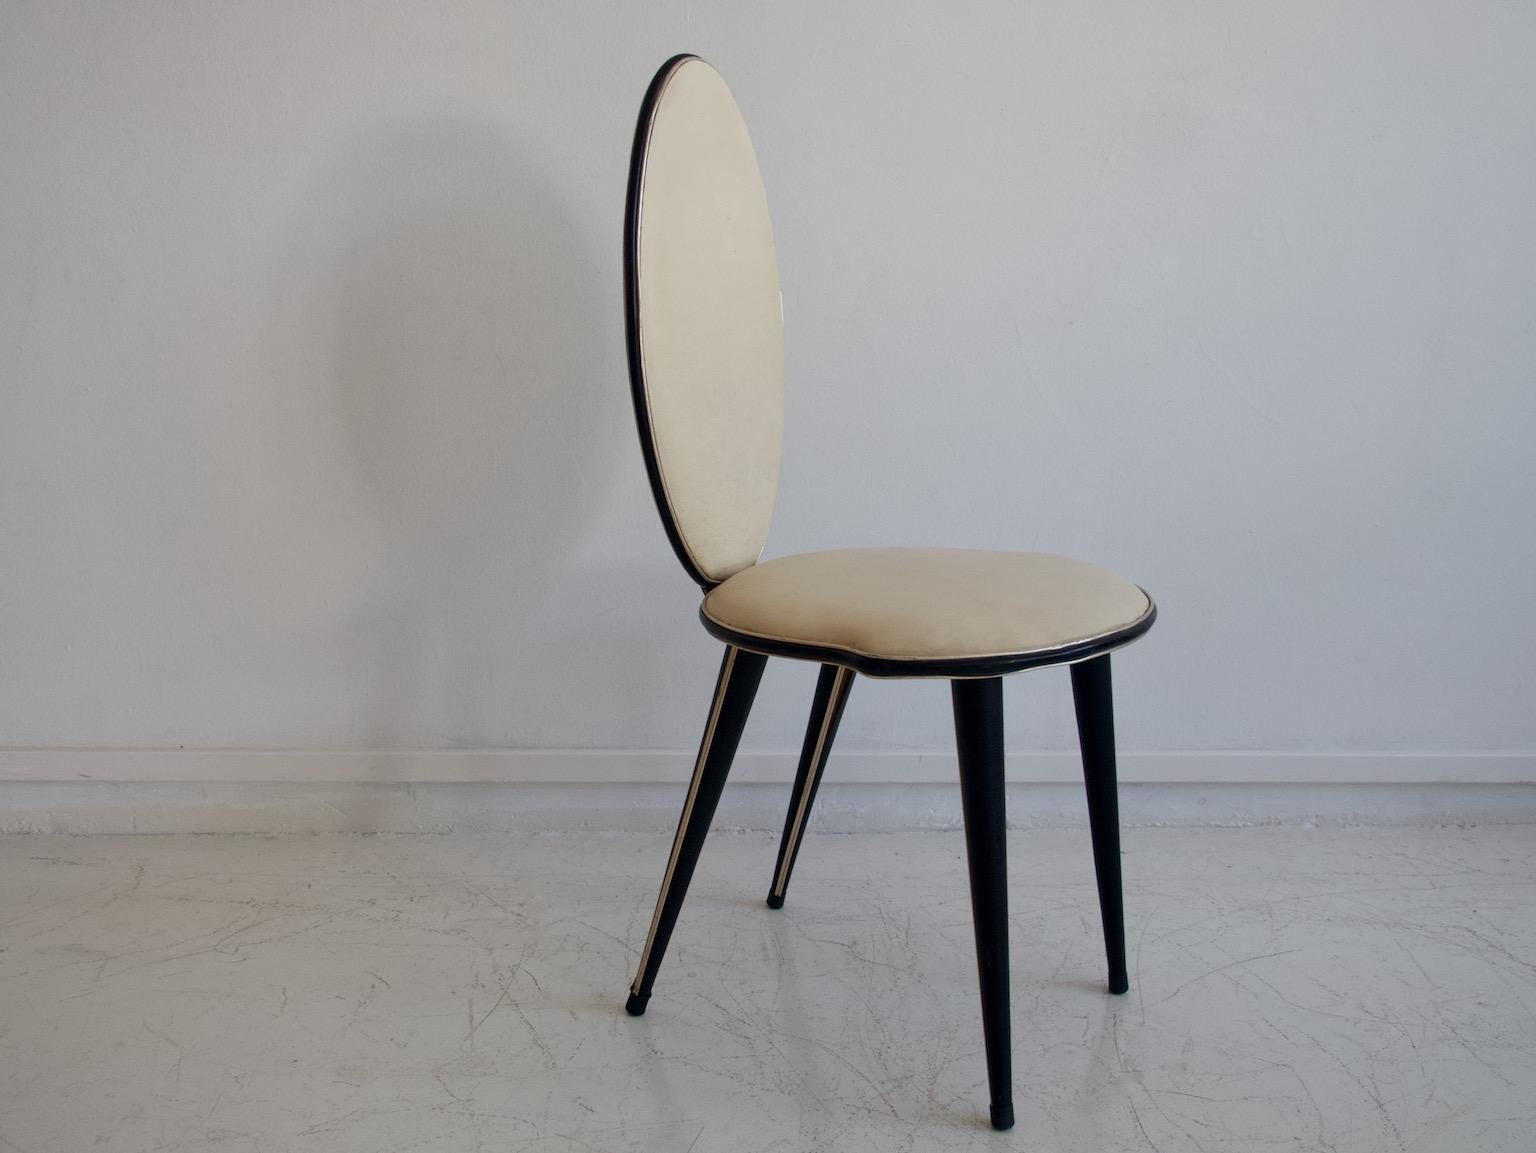 Italian Umberto Mascagni Cream and Black Faux Leather Chair